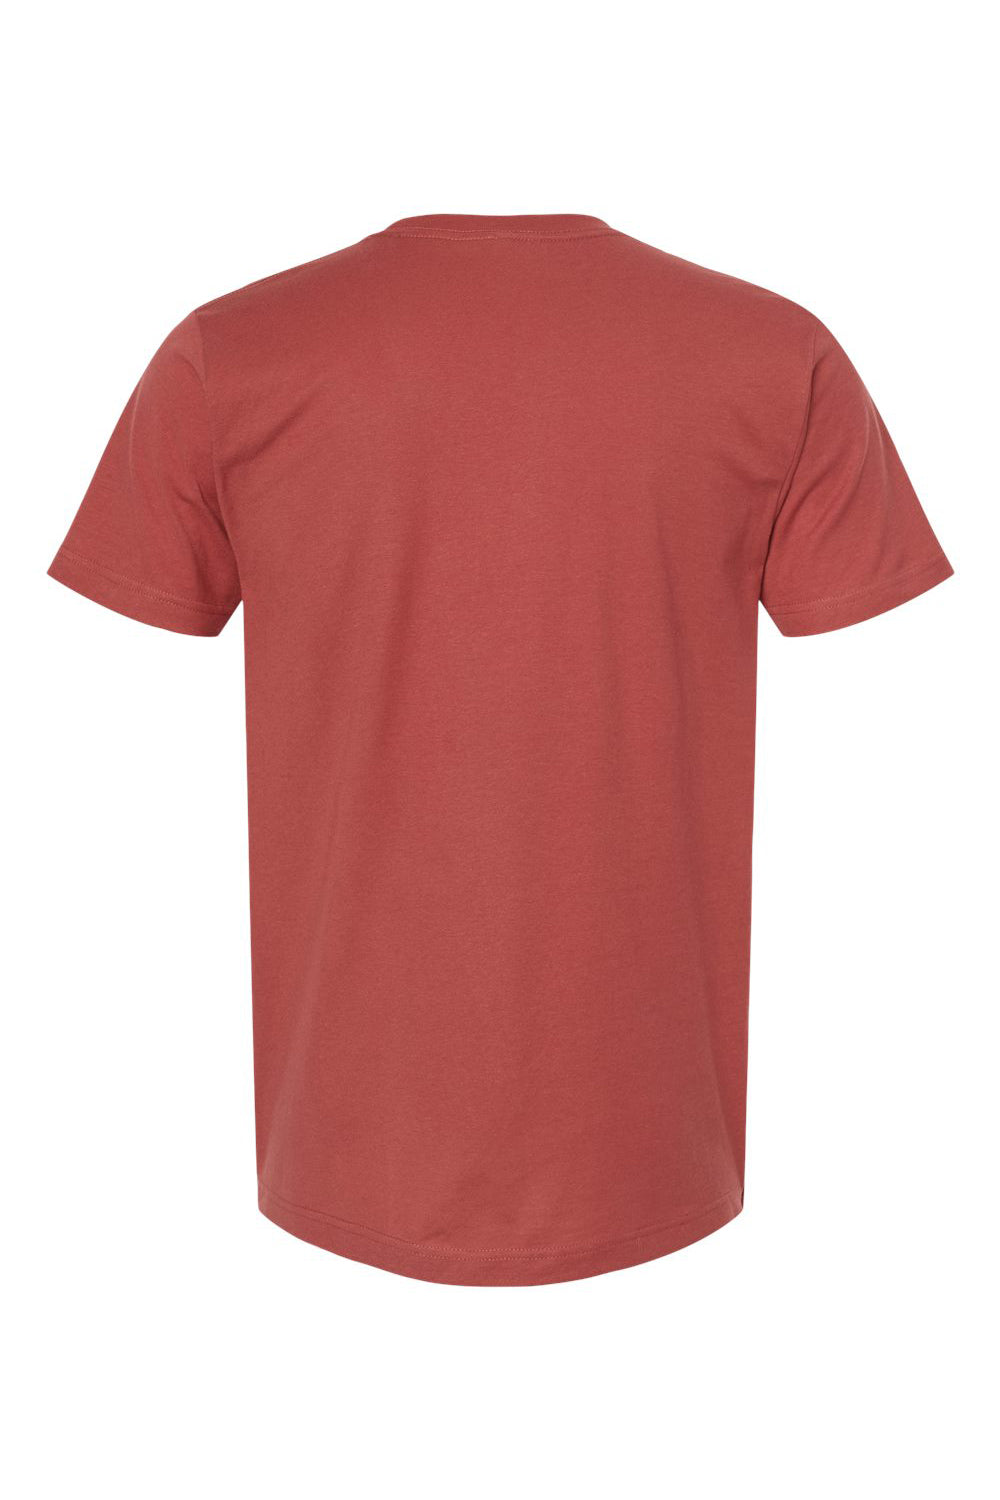 Tultex 202 Mens Fine Jersey Short Sleeve Crewneck T-Shirt Terracotta Red Flat Back